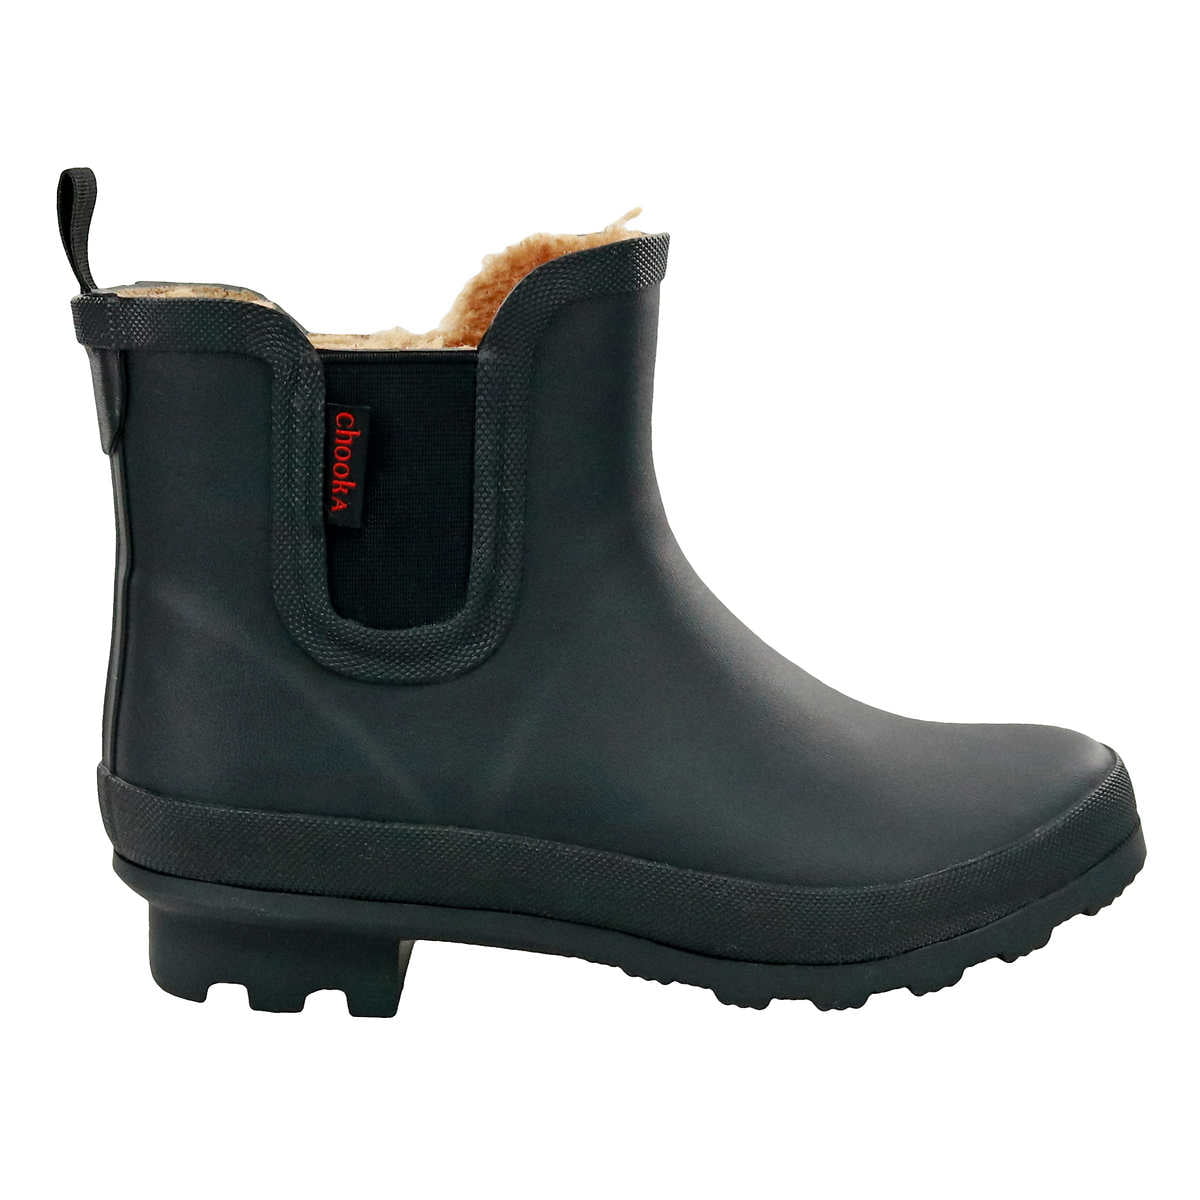 black chelsea boots size 7